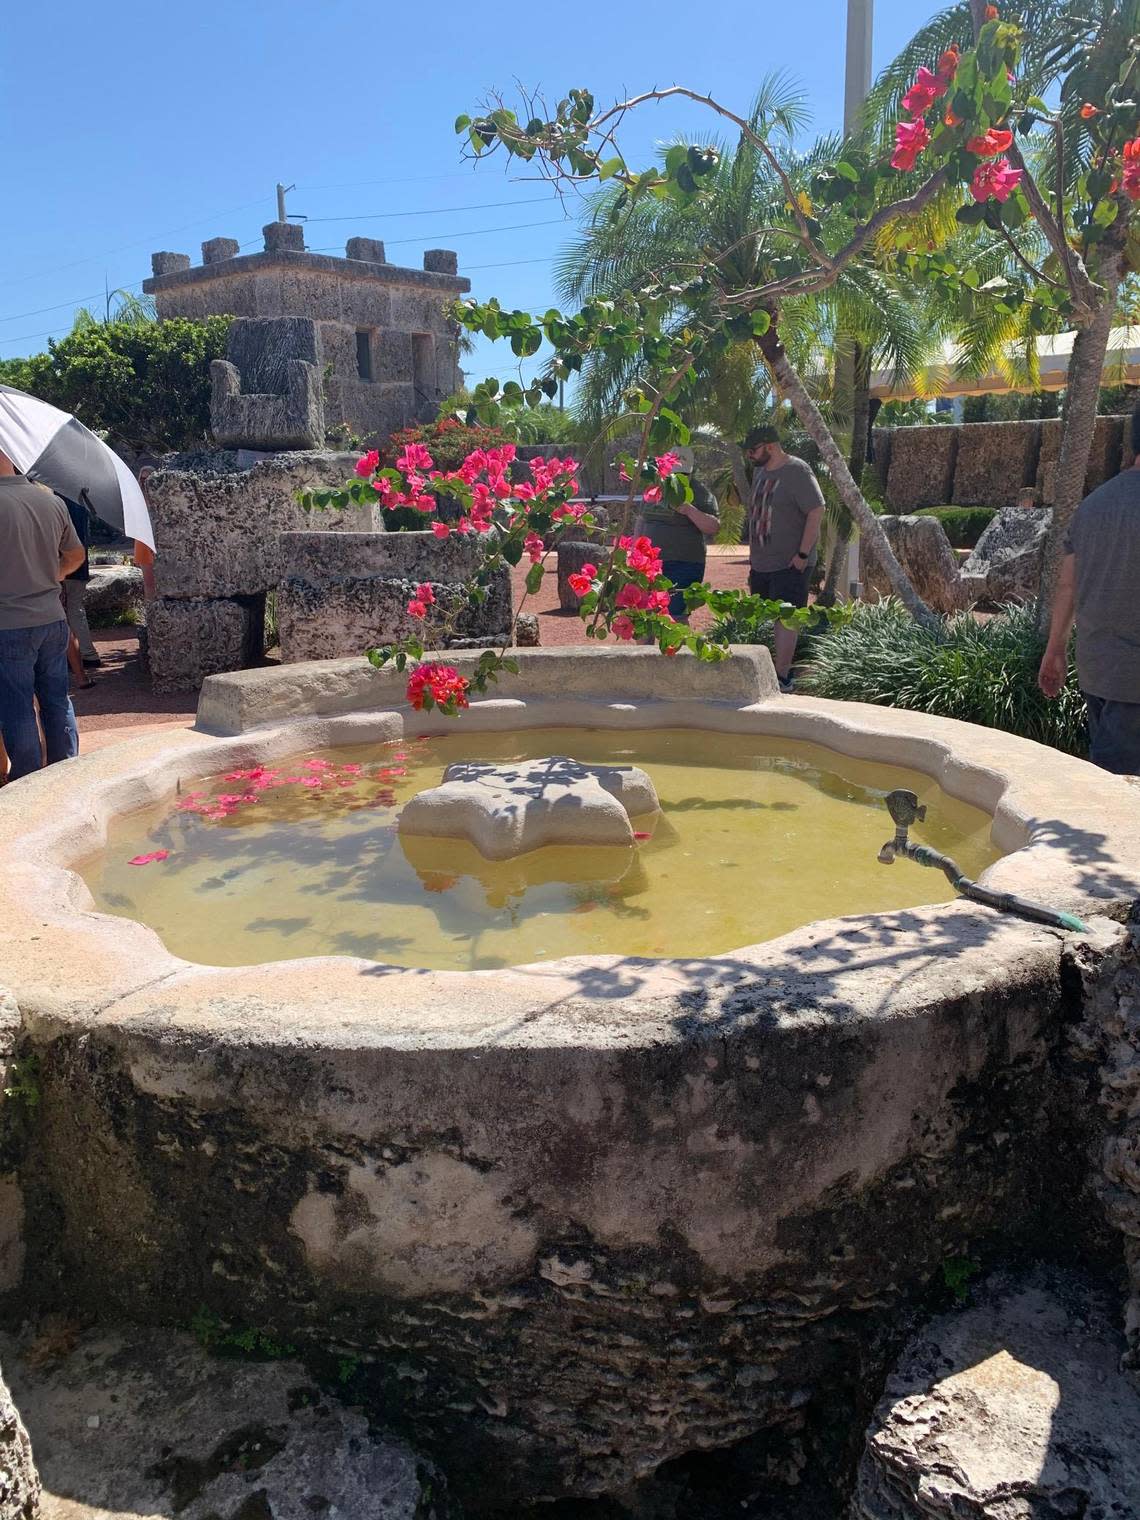 Edward Leedskalnin built Coral Castle, a garden of stone, as a monument to love.